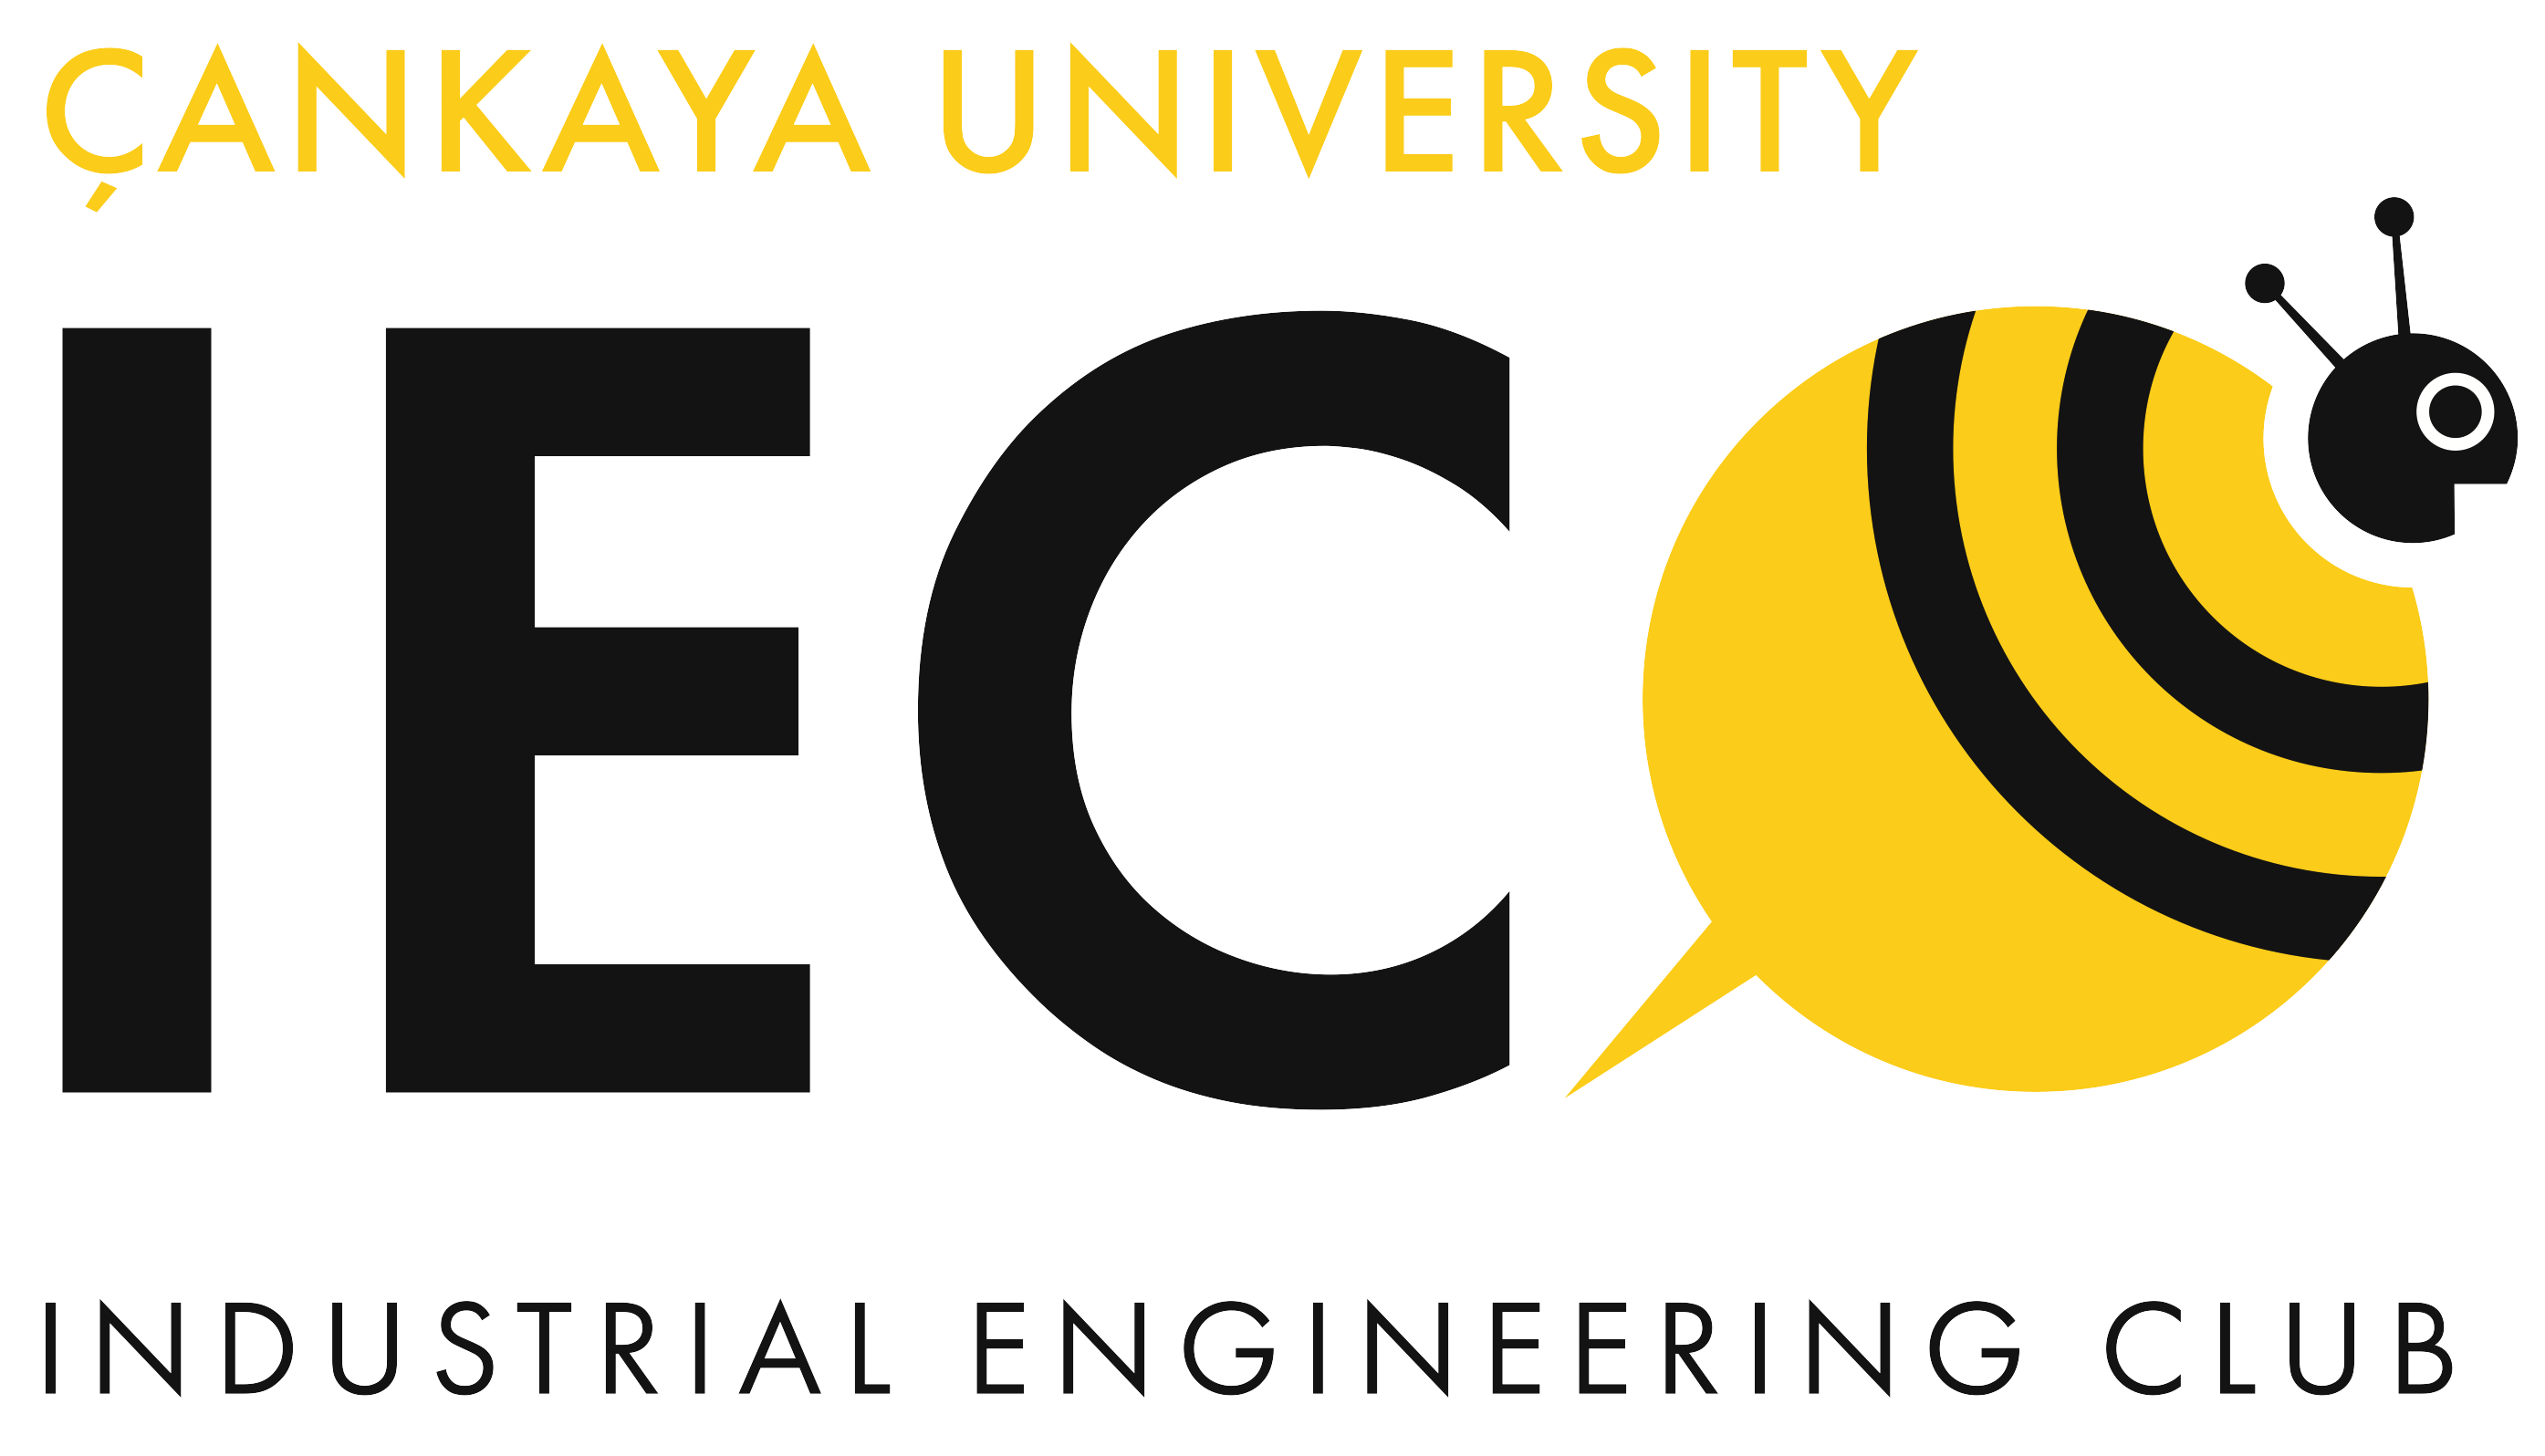 IEC Logo